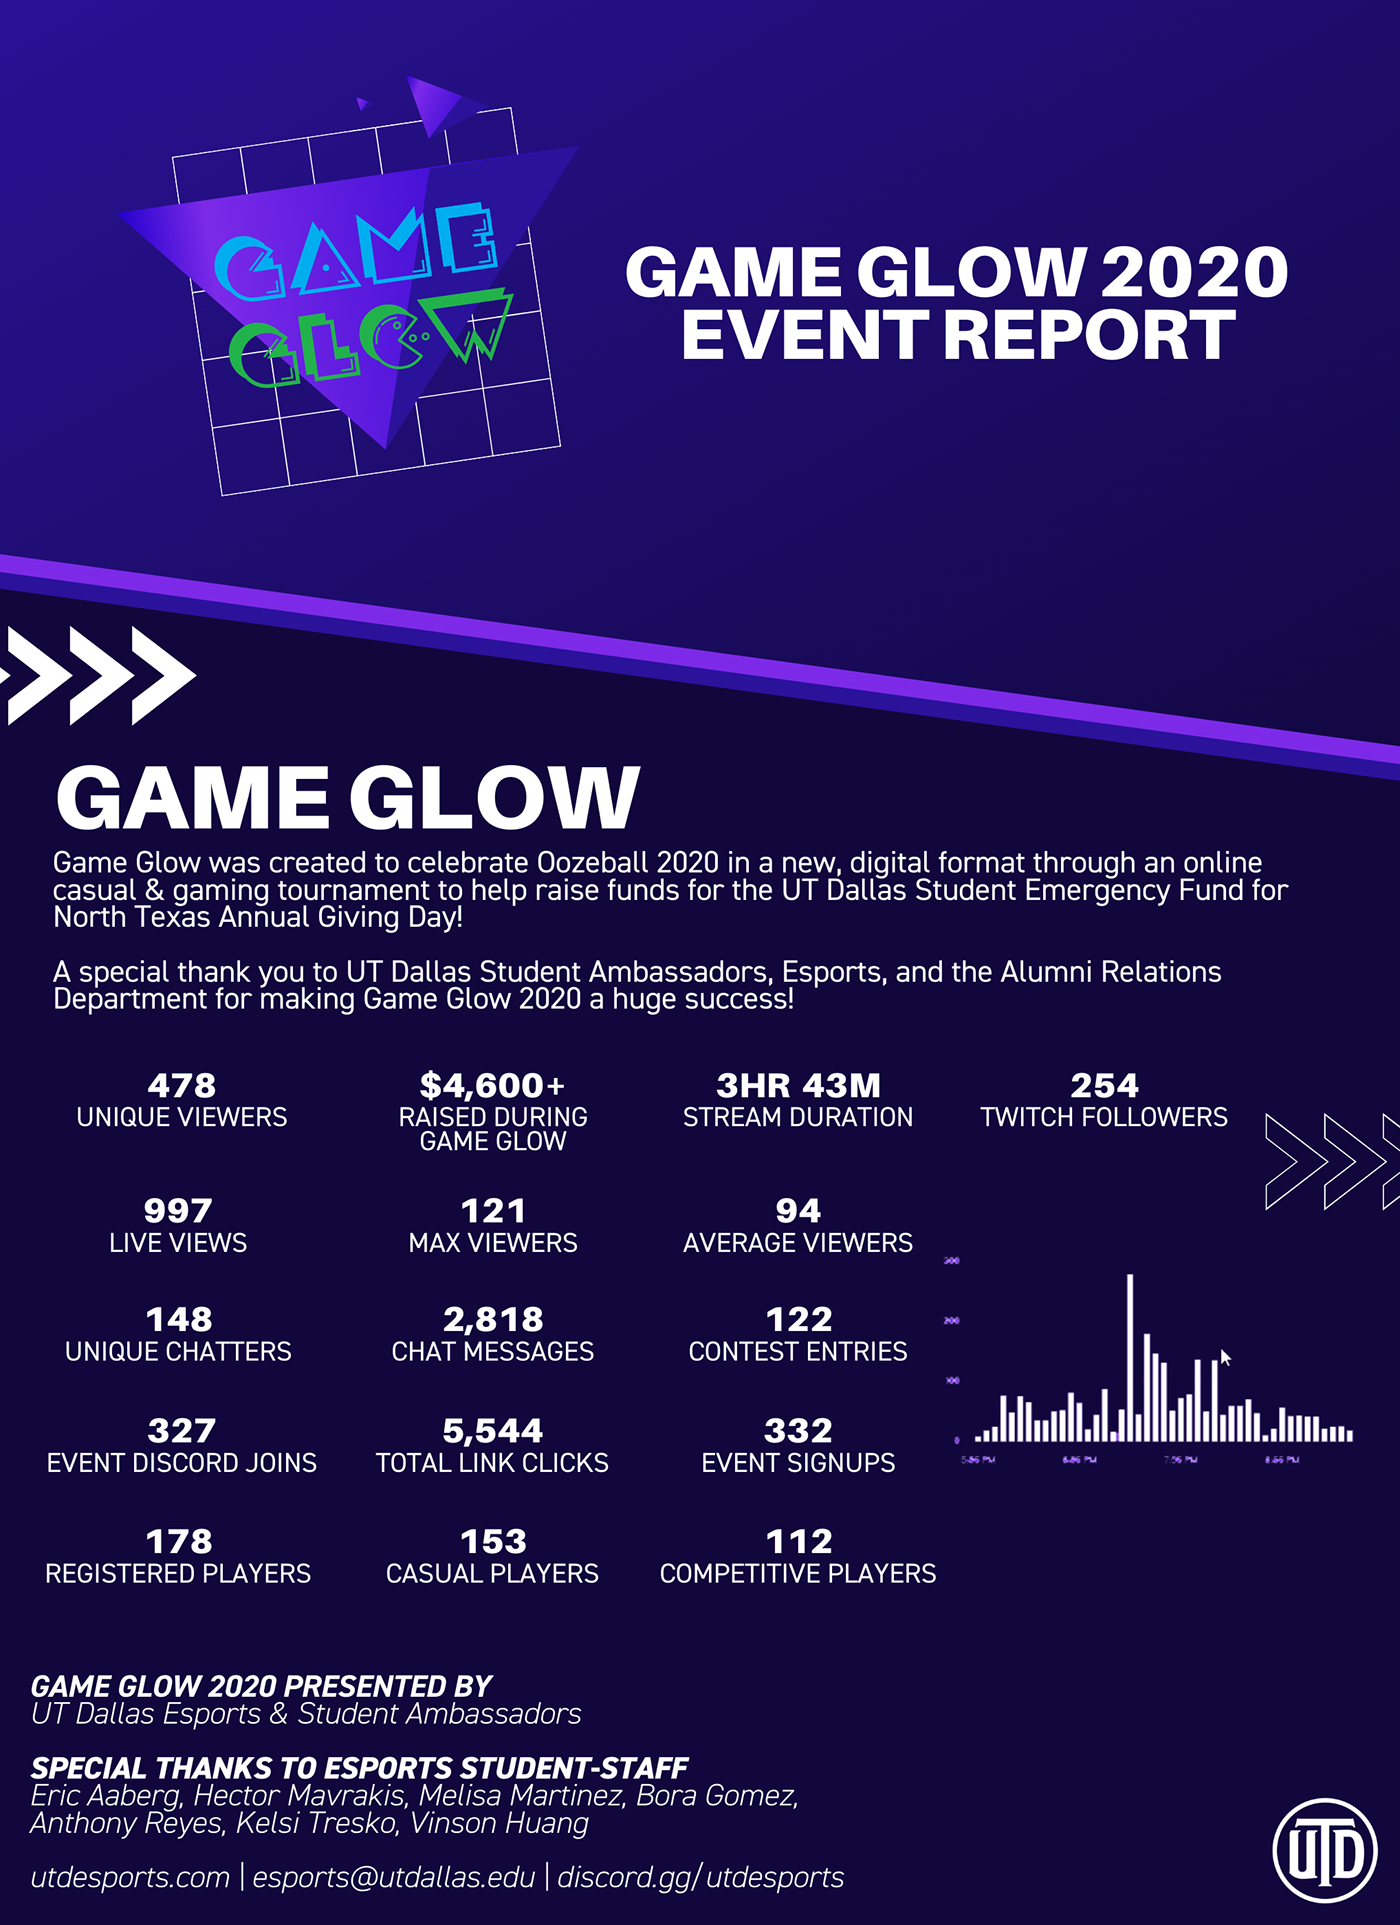 esports esports event esports marketing Event event marketing game glow marketing   ut dallas ut dallas esports utdesports